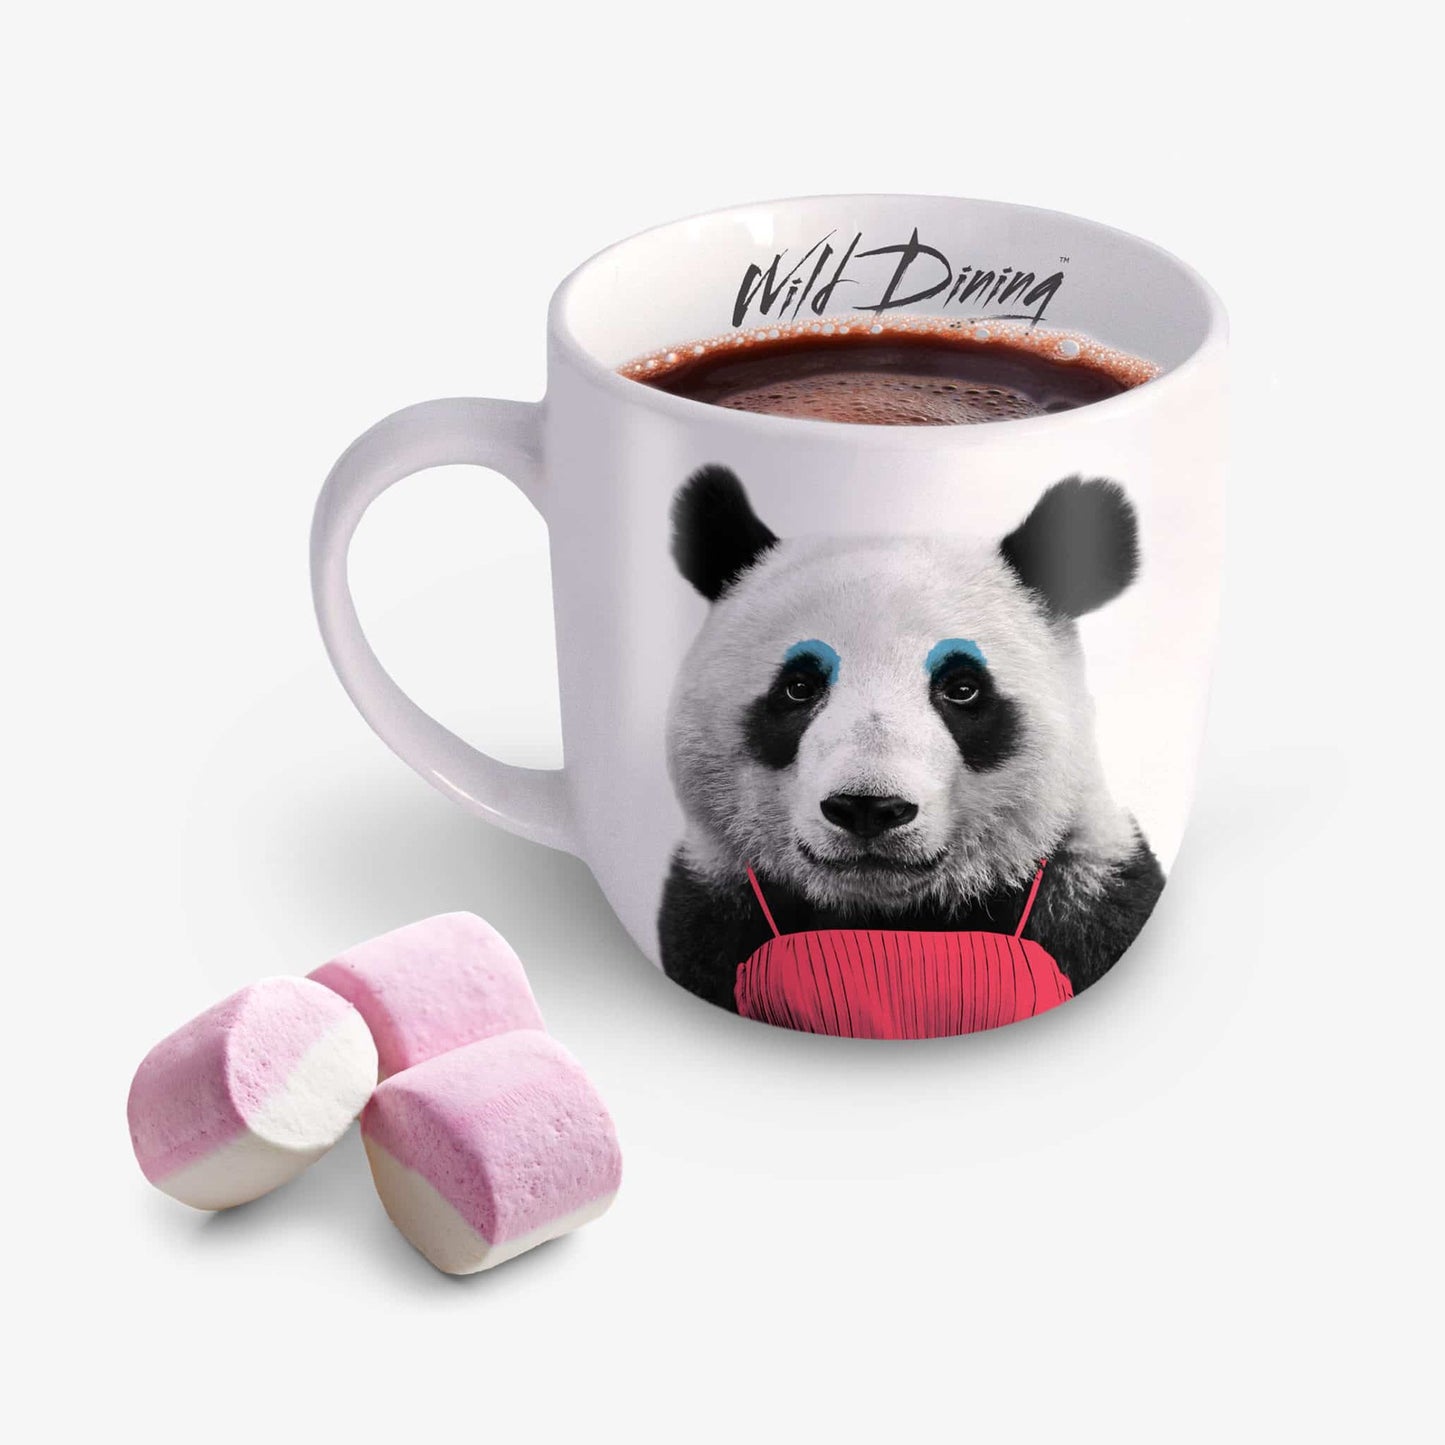 Patricia Panda Wild Dining Coffee Mug | Novelty Ceramic Mug in a Gift Box